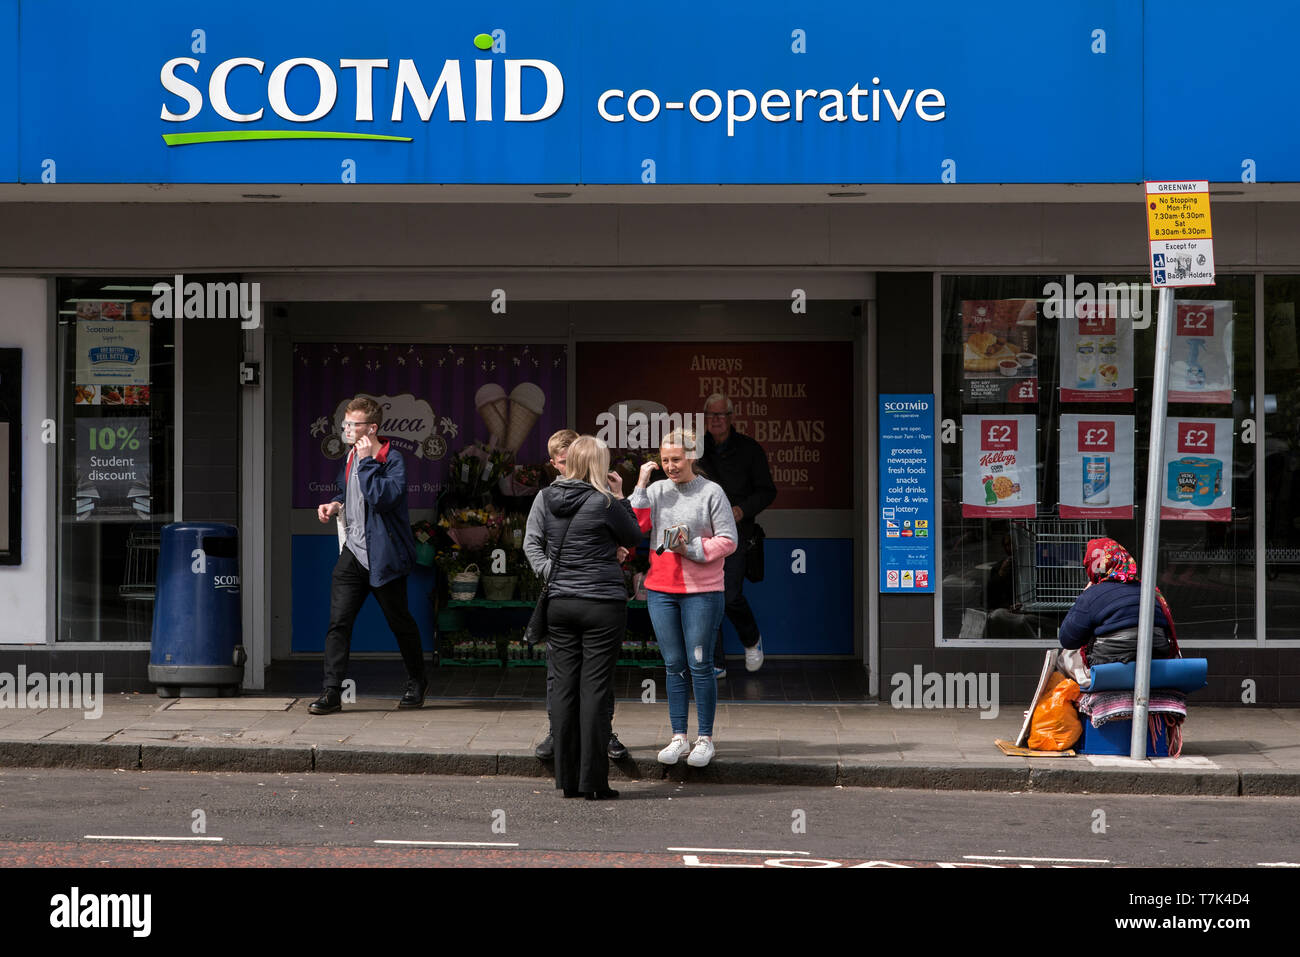 External view of a Scotmid co-operative store in Edinburgh, Scotland, UK. Stock Photo